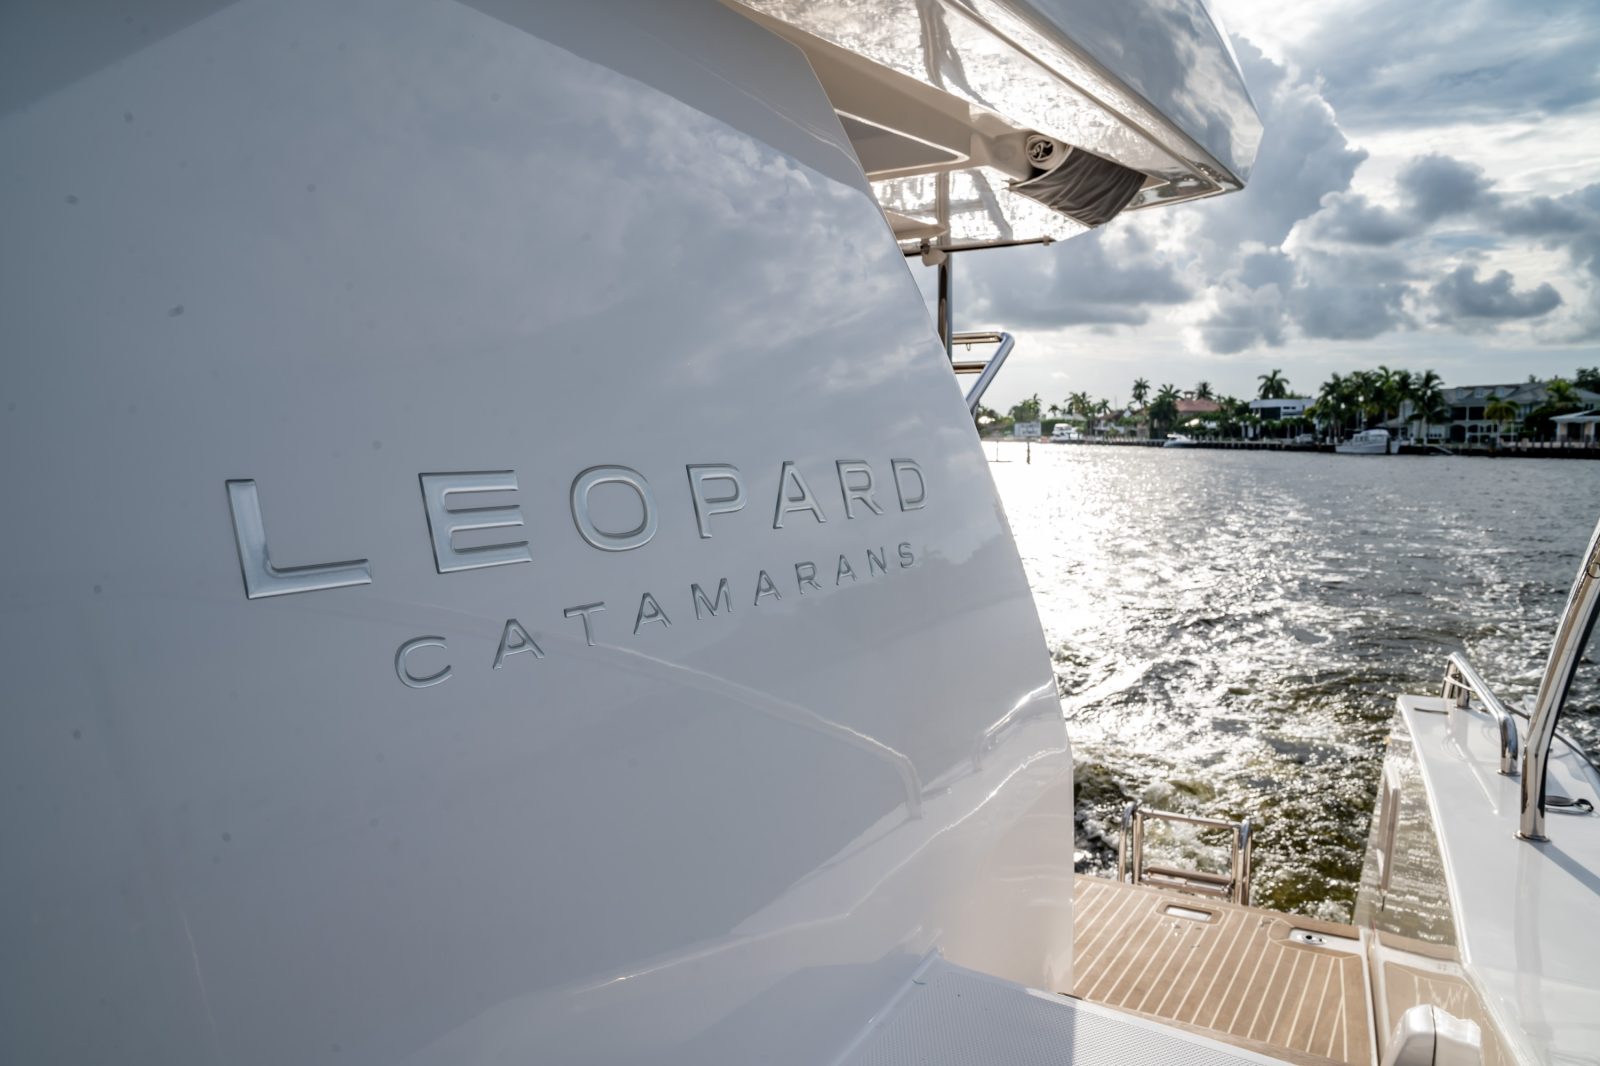 leopard catamarans fort lauderdale